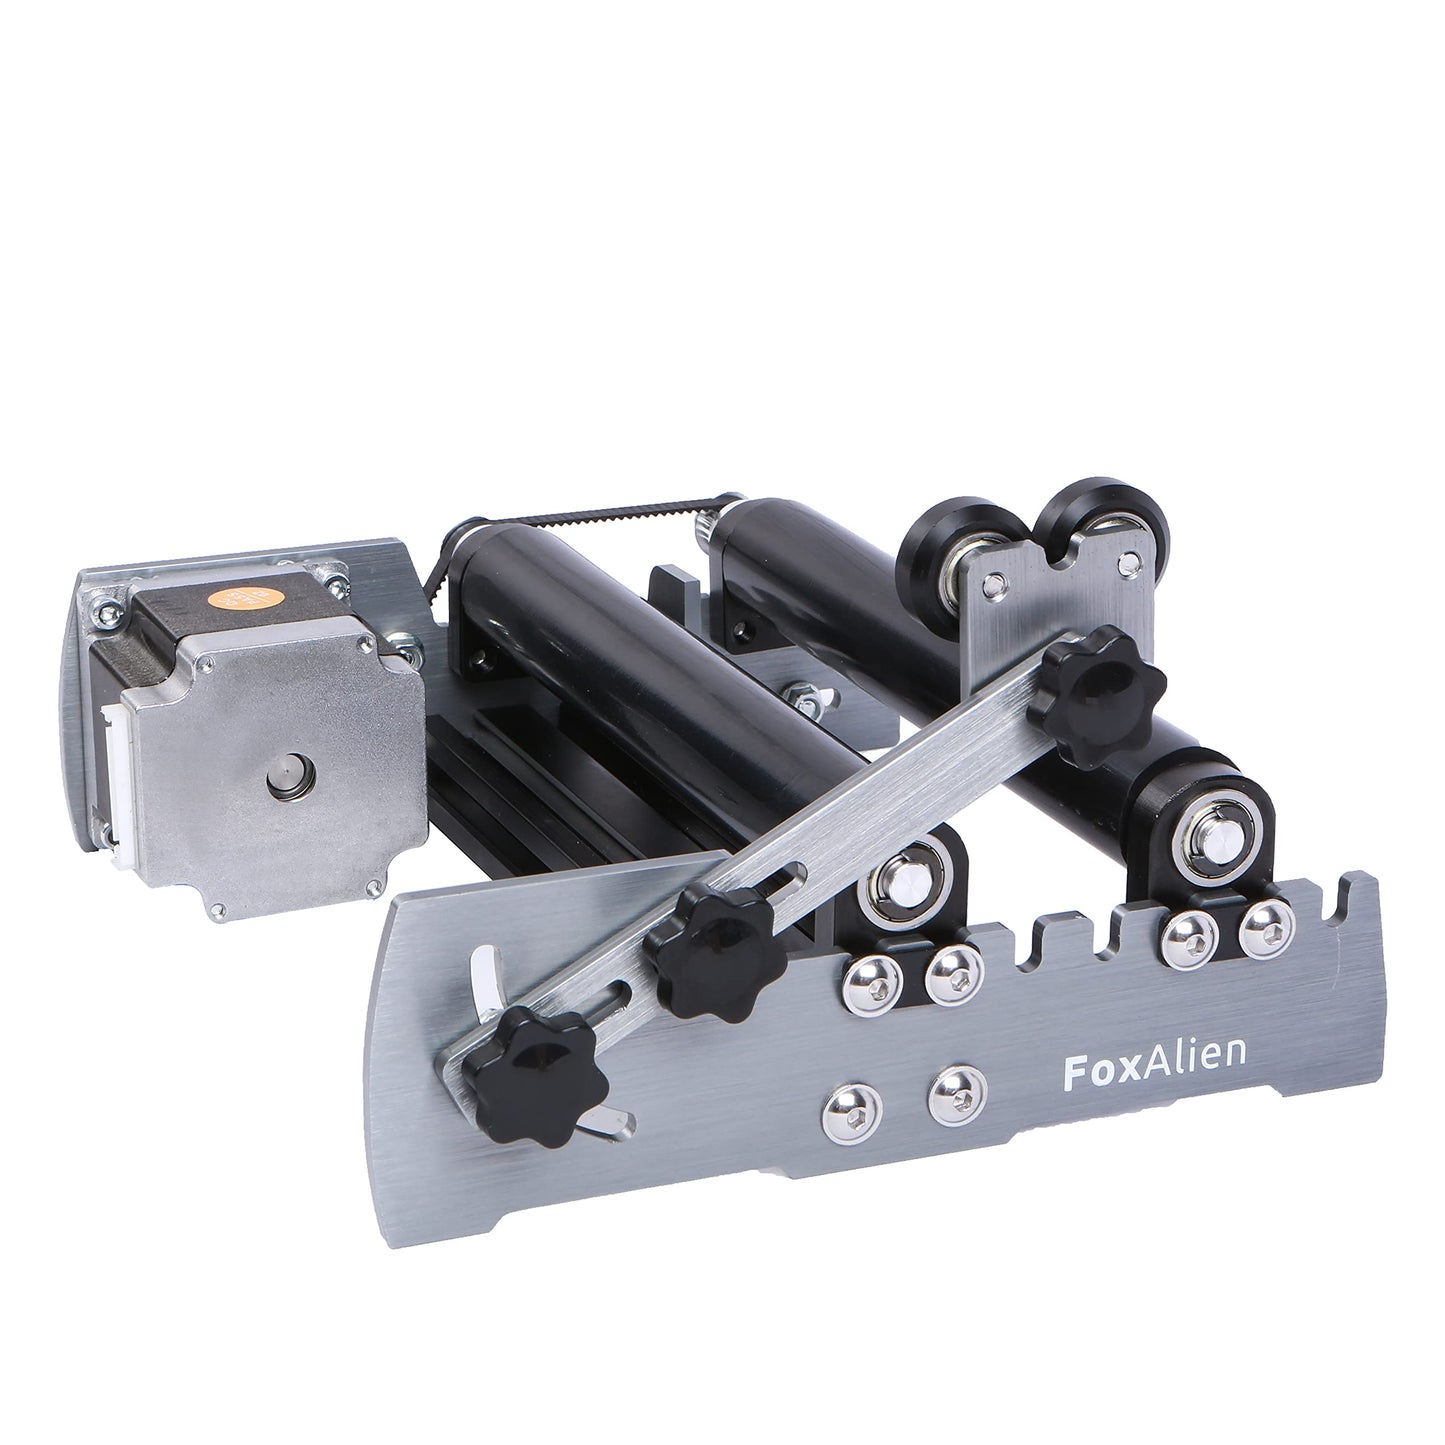 FoxAlien R57 - Módulo de grabado de rodillo giratorio de eje Y para objetos cilíndricos, superficie curvada para FoxAlien 4040-XE CNC Router máquina de grabado